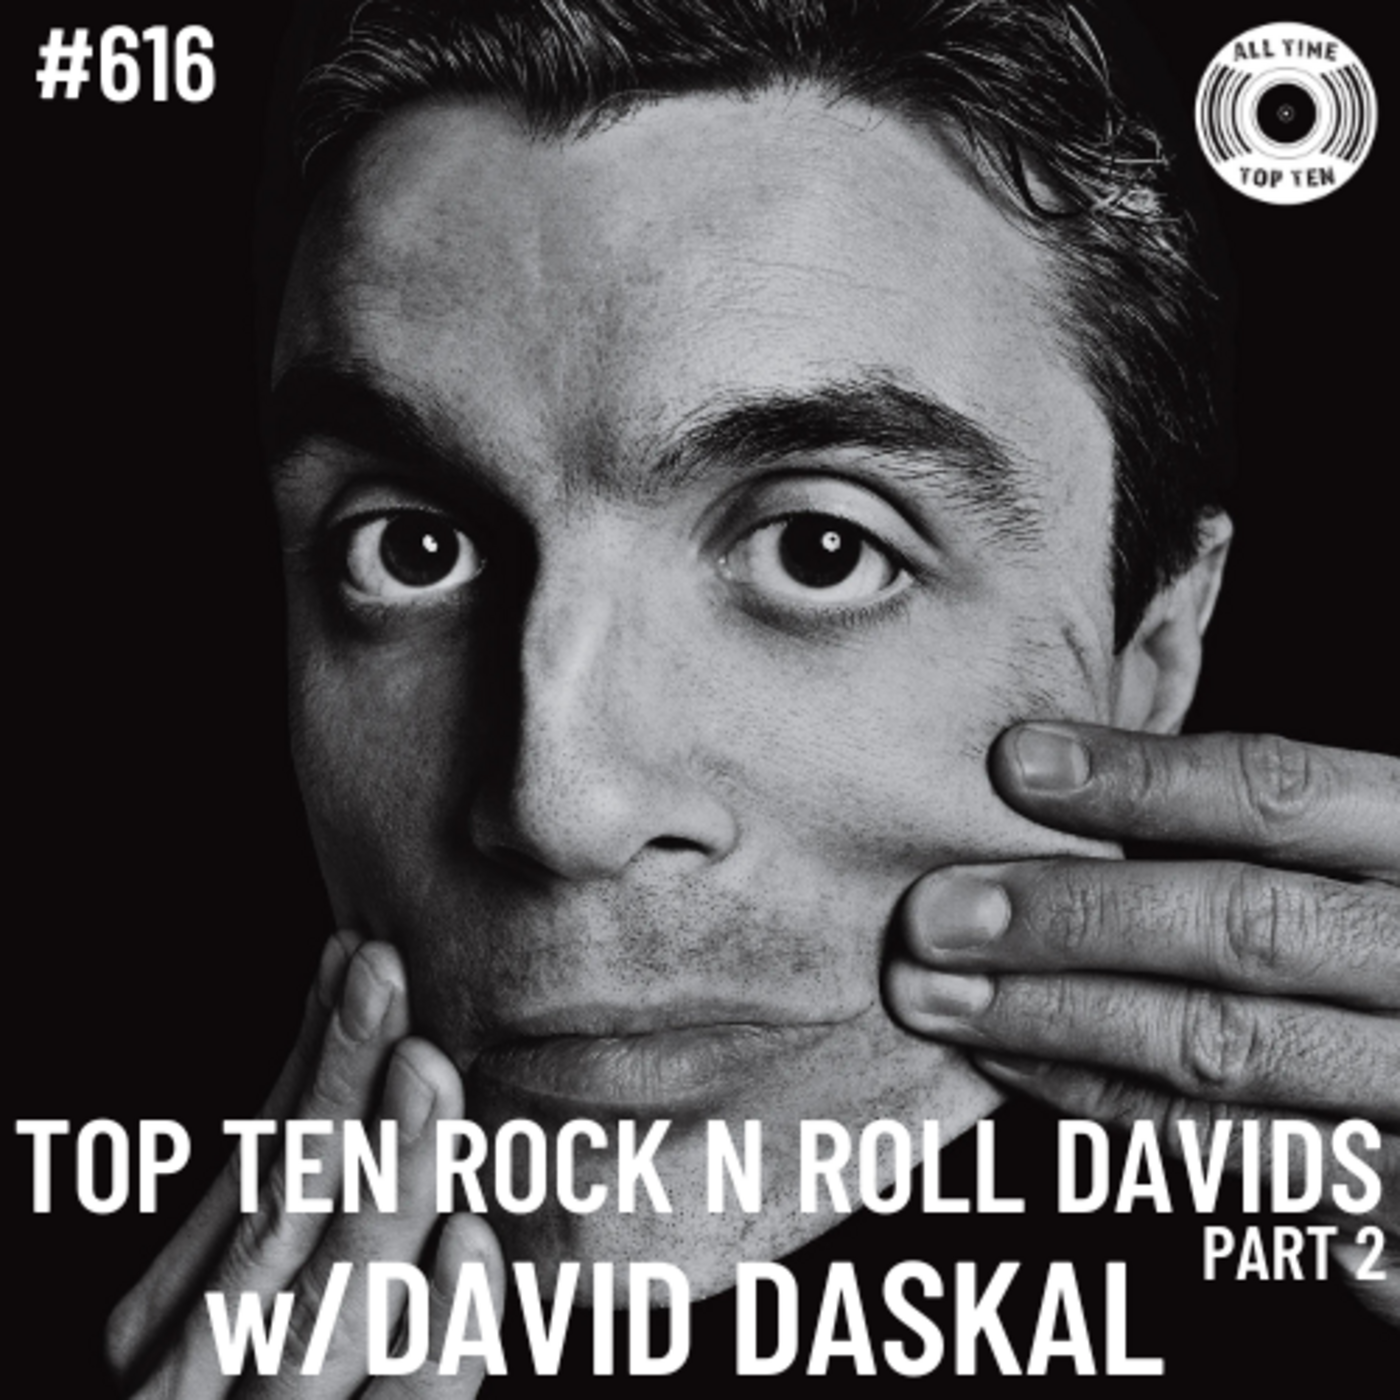 Episode 616 - Top Ten Rock N Roll Davids Part 2 w/David Daskal